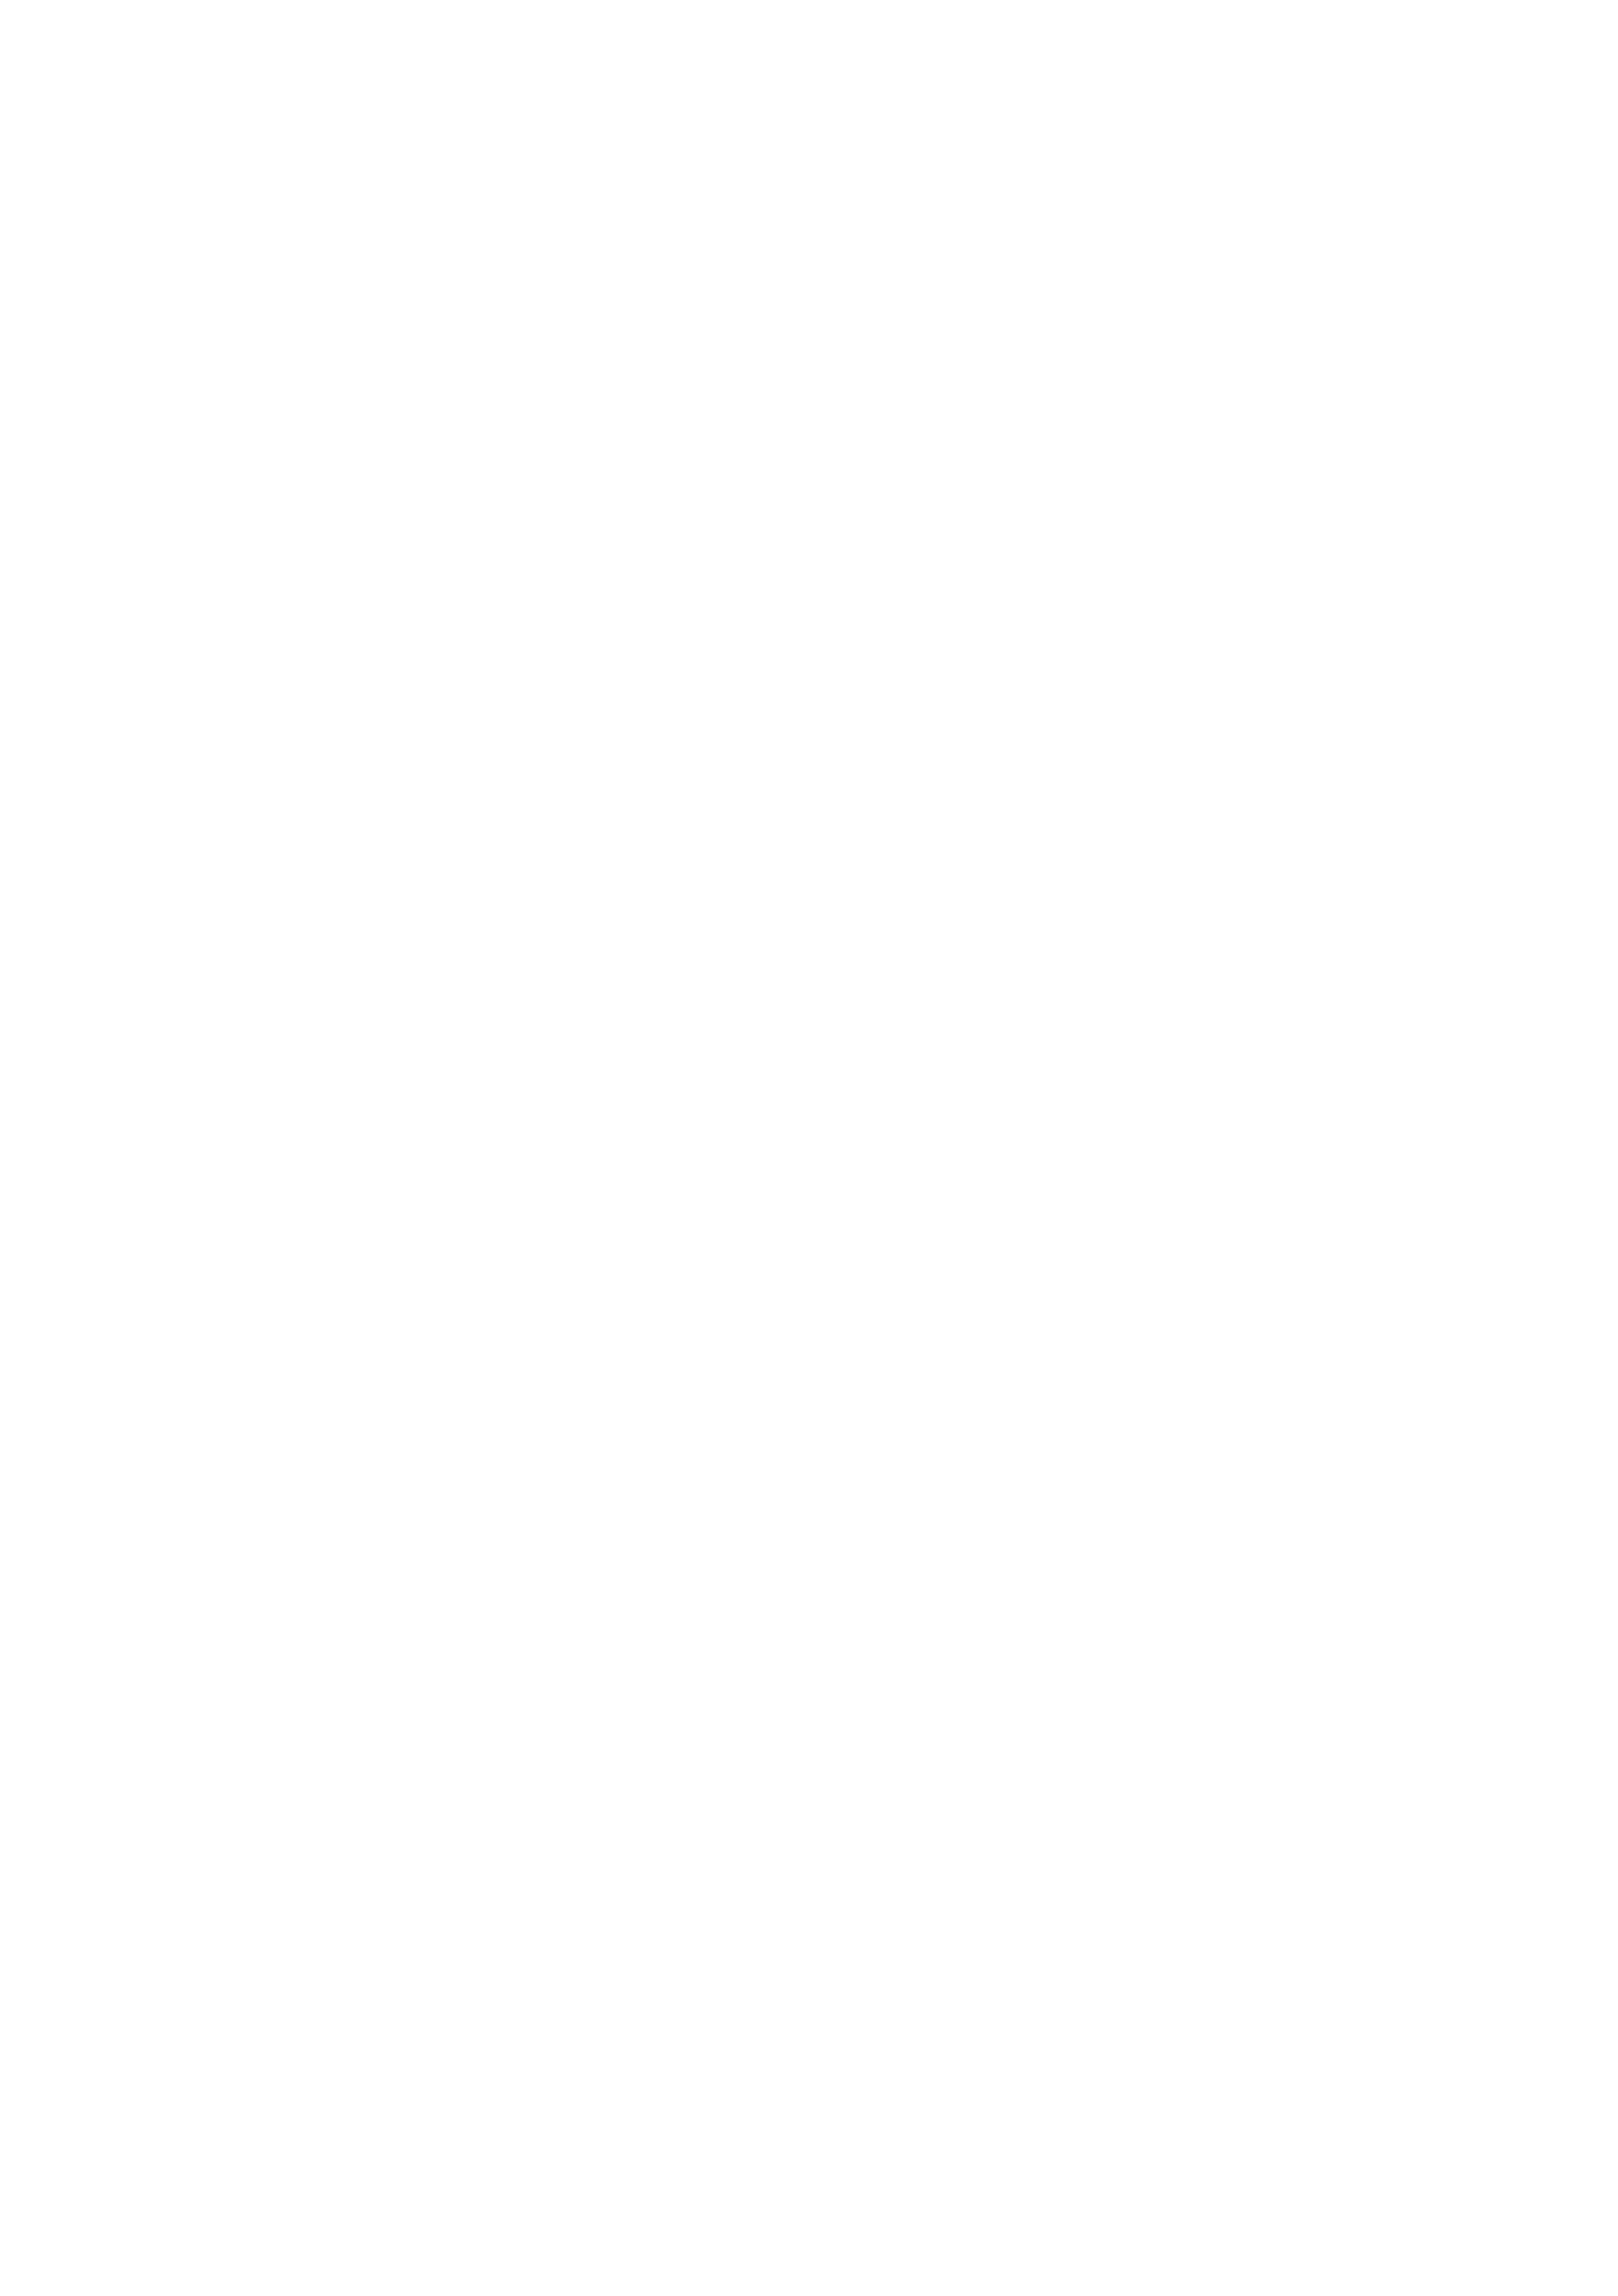 OEH Uni Graz